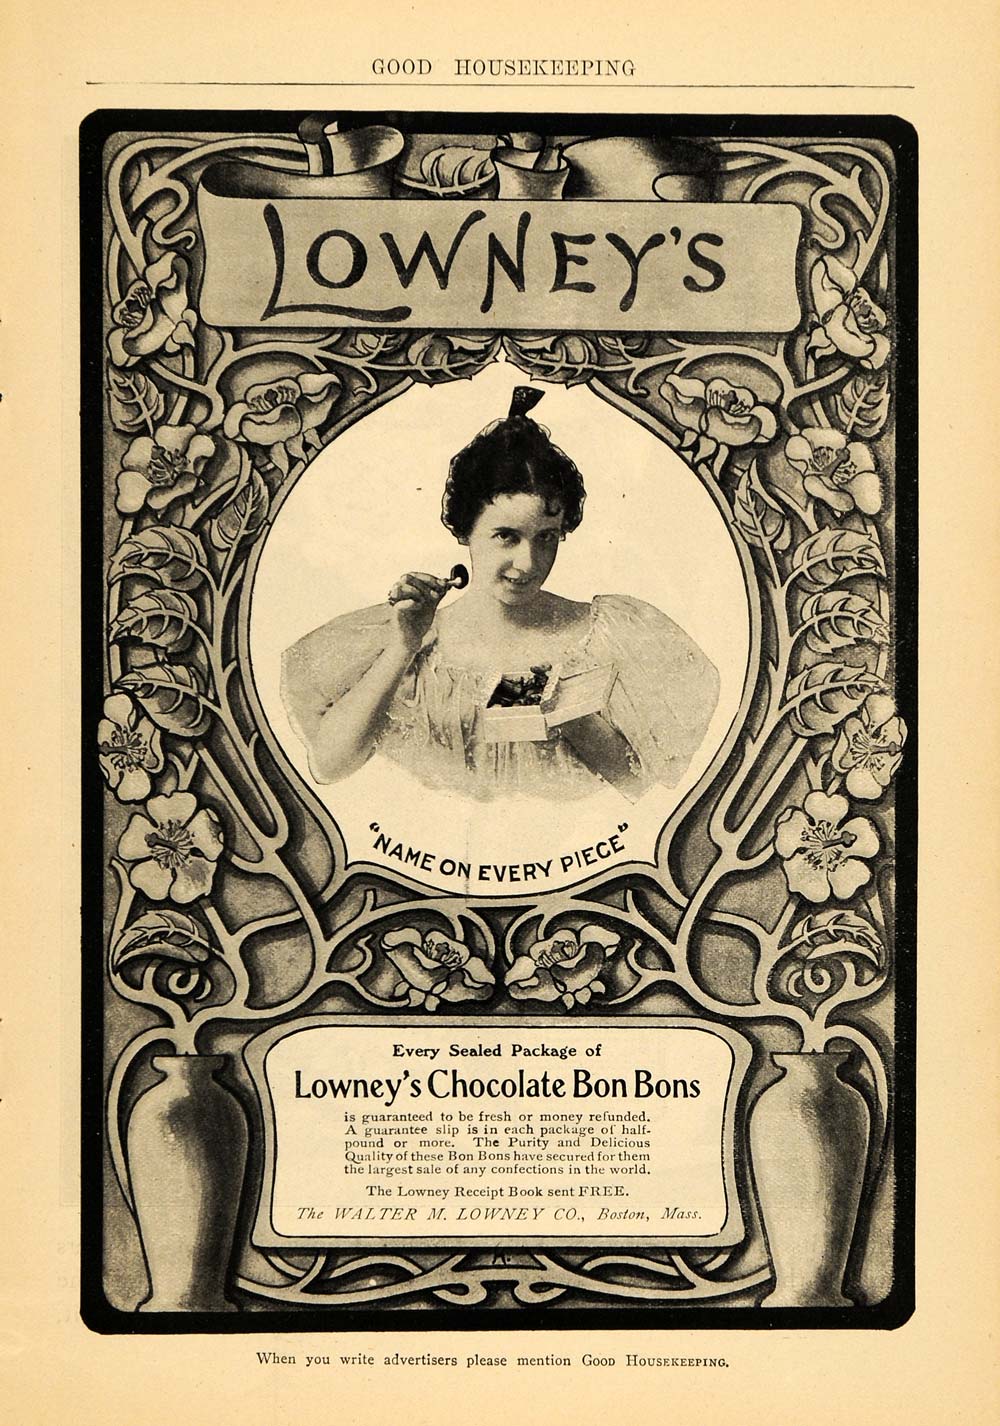 1904 Ad Chocolate Bon Bons Walter M. Lowney Candy - ORIGINAL ADVERTISING GH2